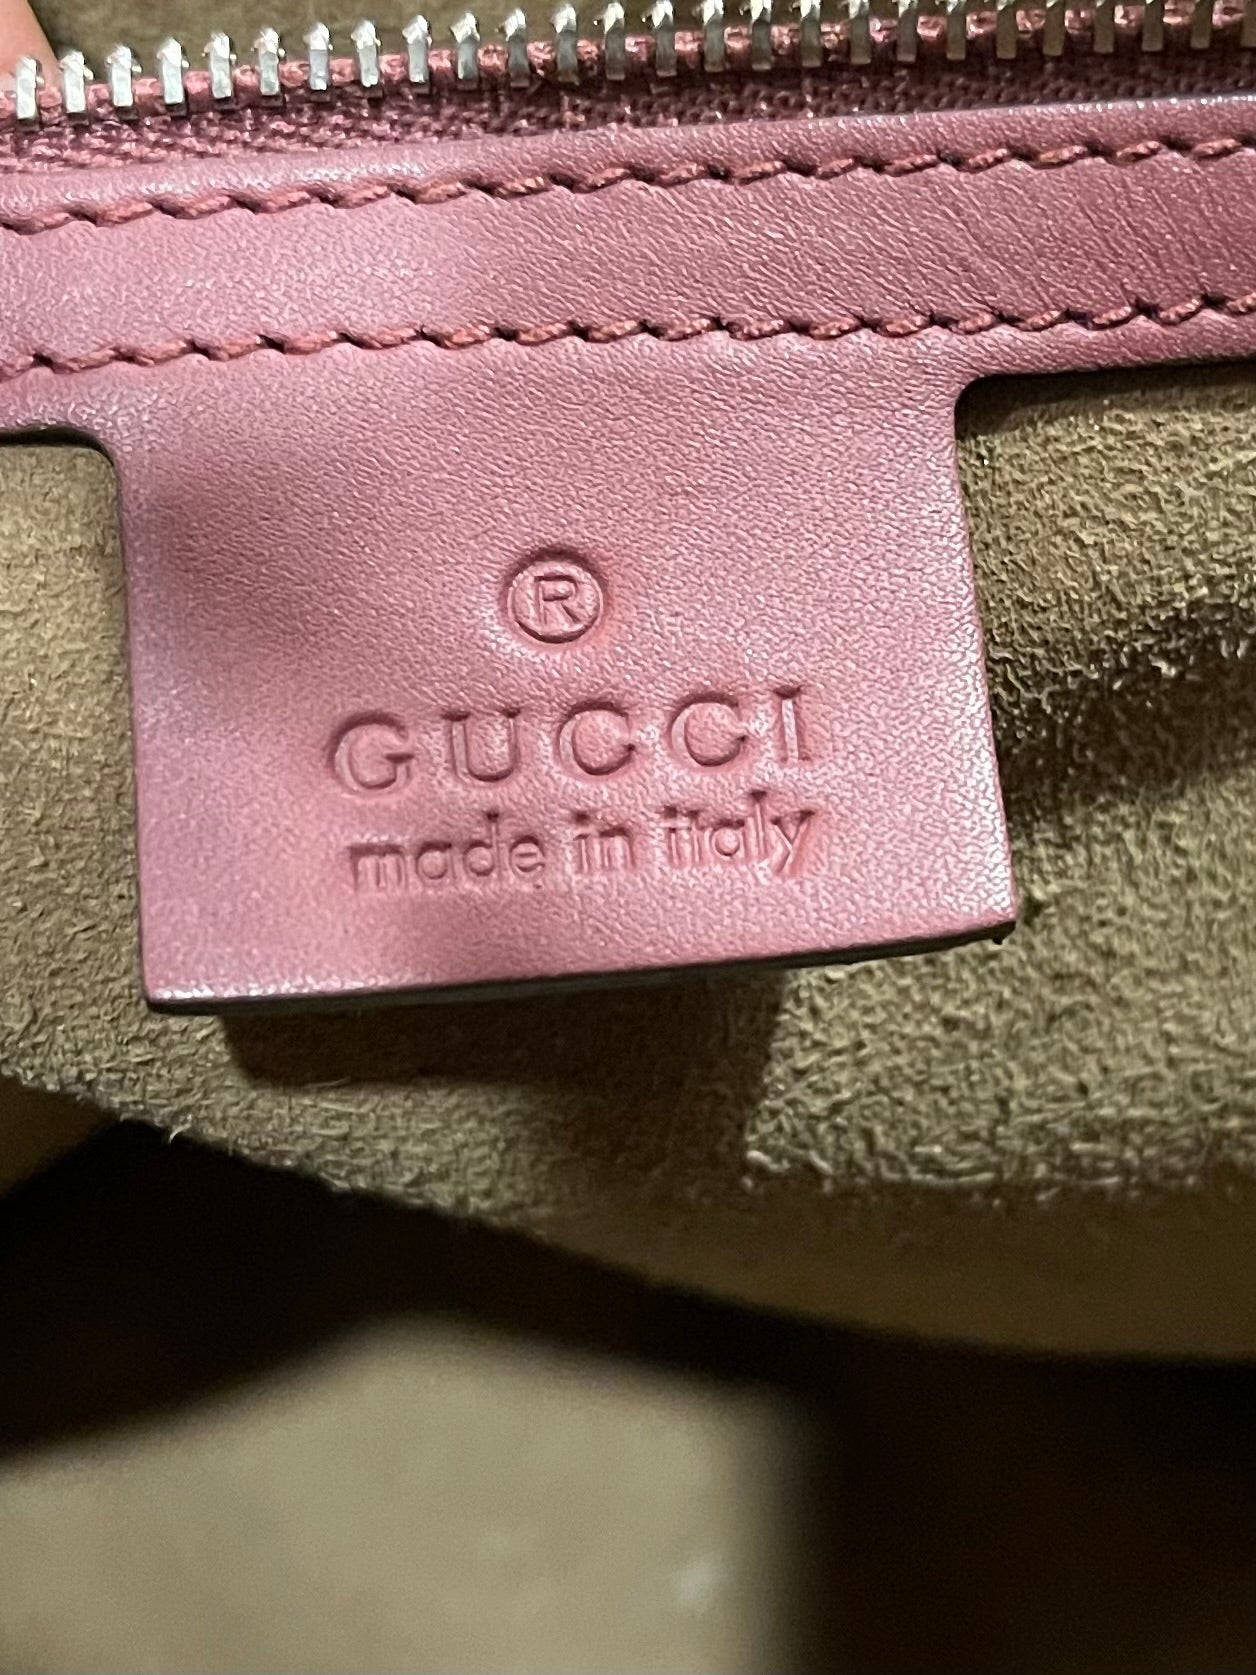 Gucci GG Supreme Blooms Medium Dionysus Shoulder Bag